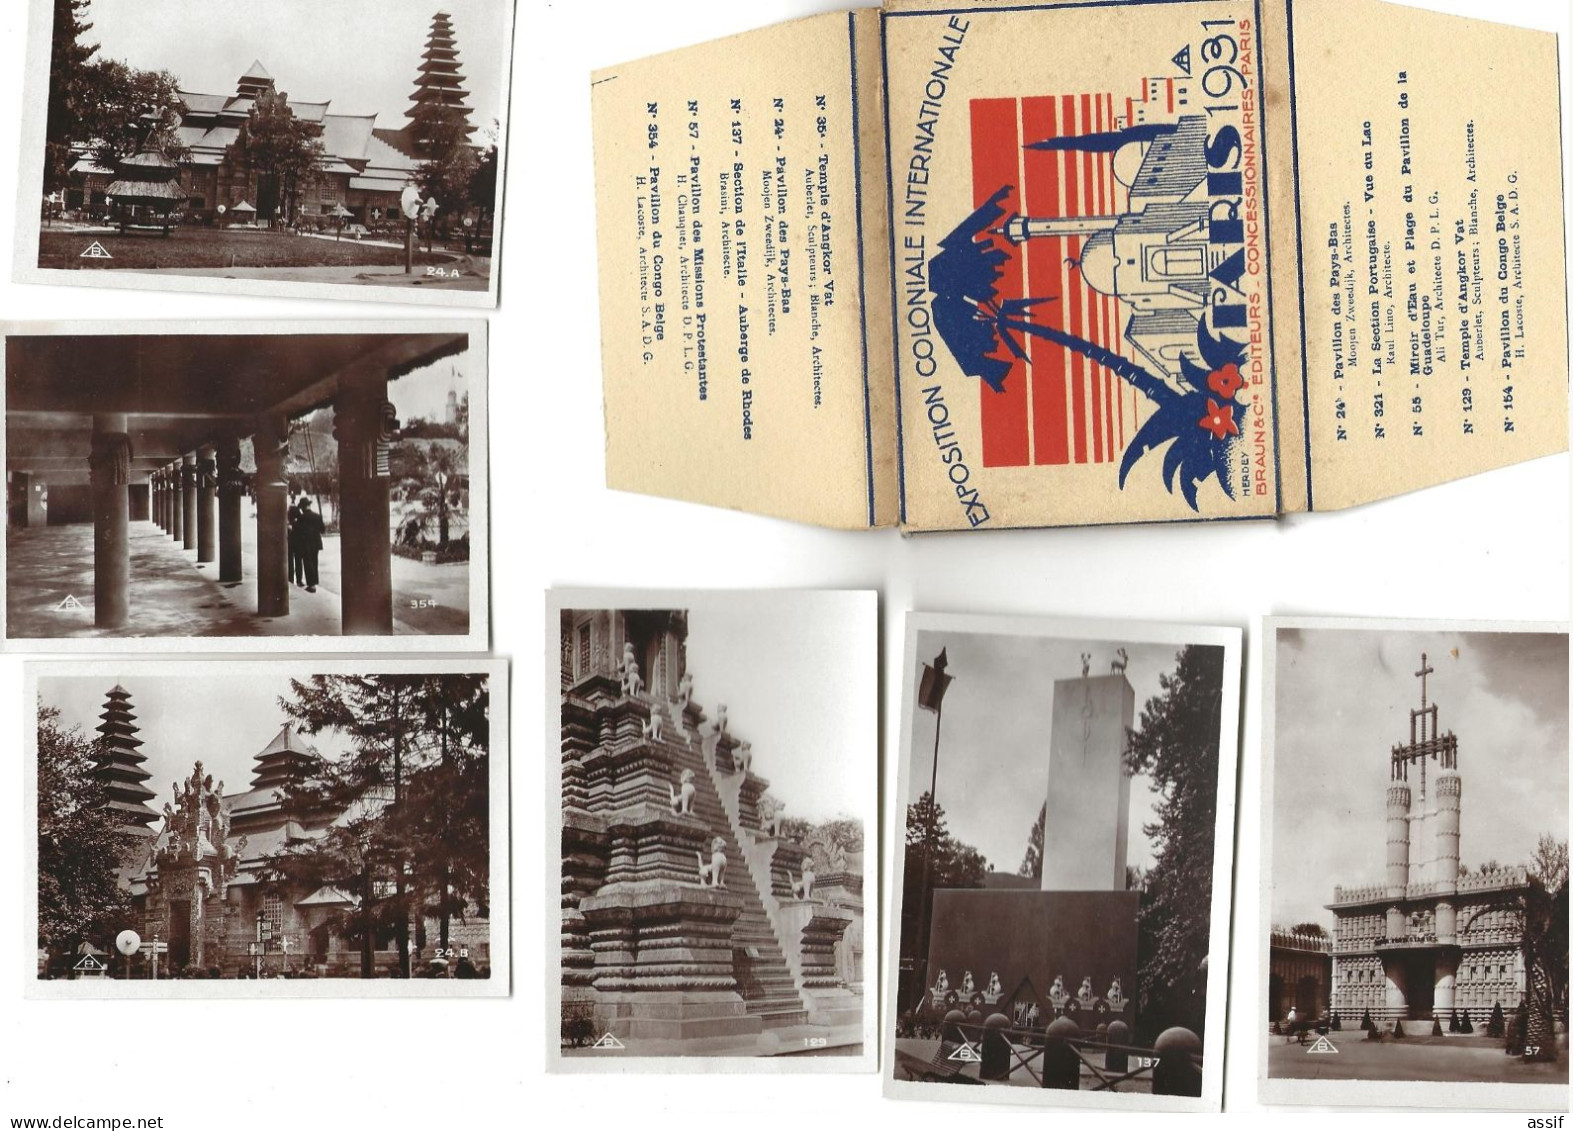 Exposition Coloniale Internationale Paris 1931 - 8 Pochettes  X 10 Photos = 80 Doc. ( Série  Braun & Cie ) - Ohne Zuordnung